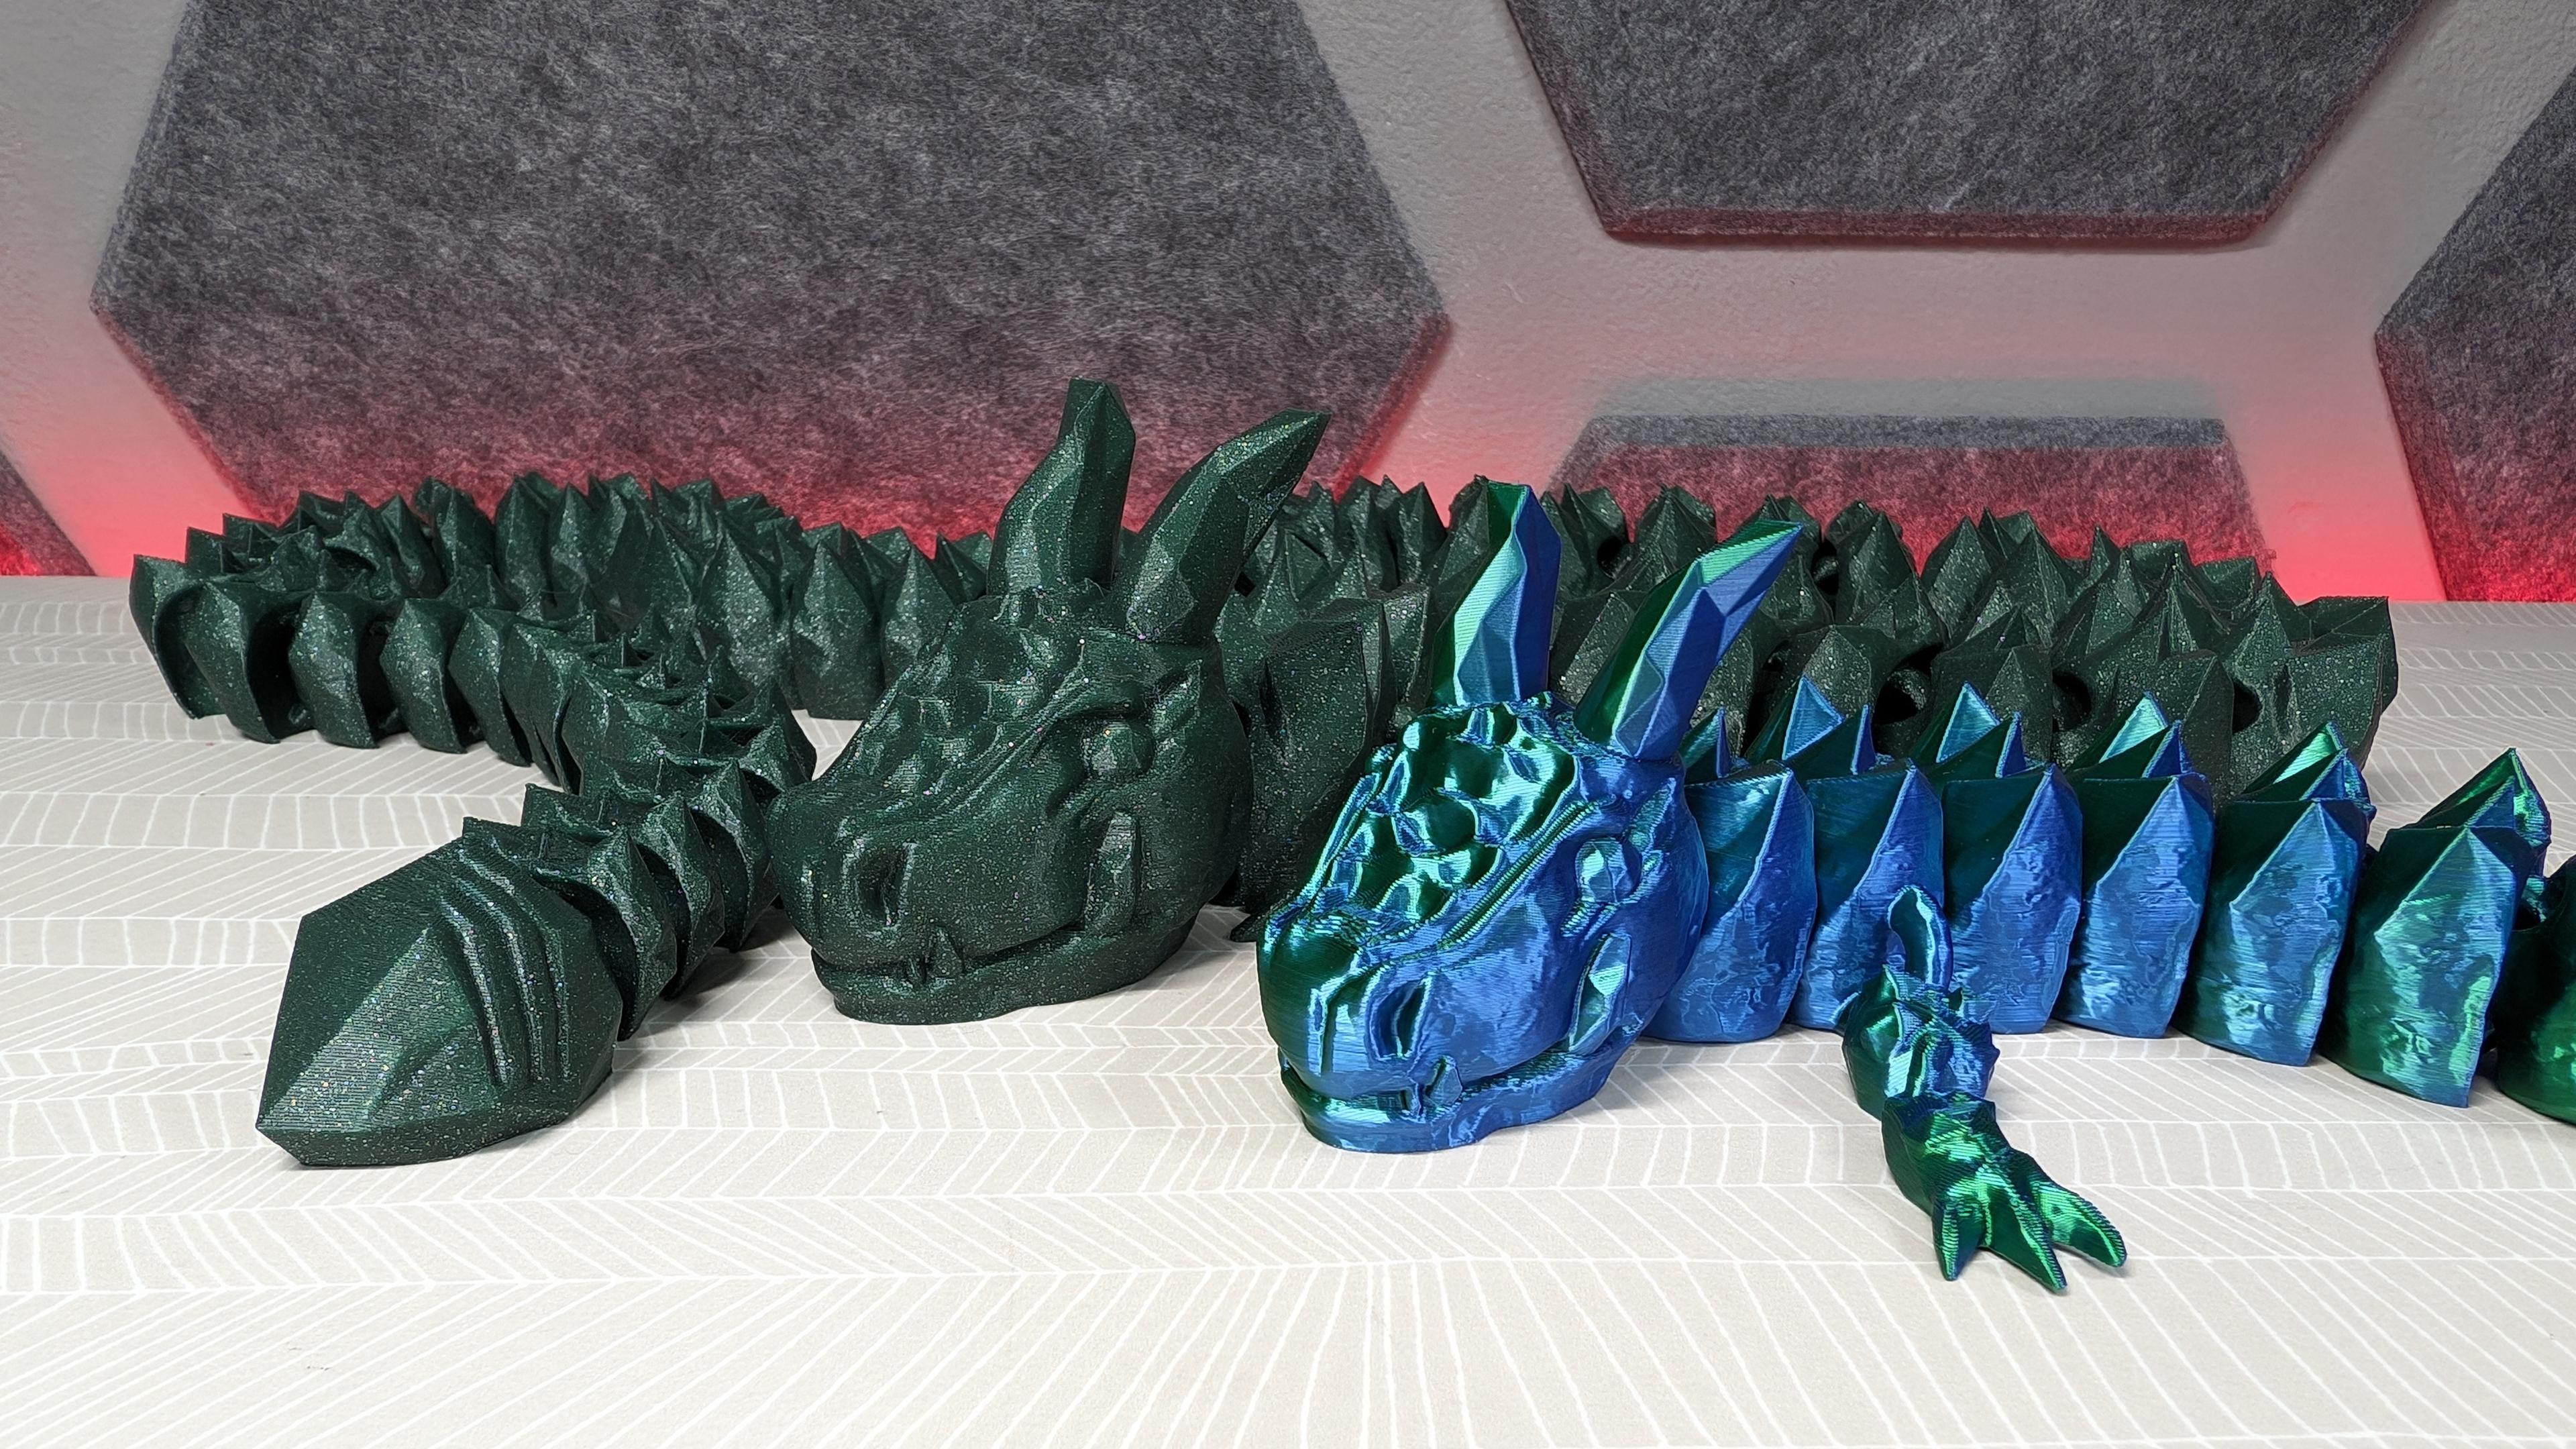 Elder Crystal Dragon (Flexible, Print-in-Place) 3d model